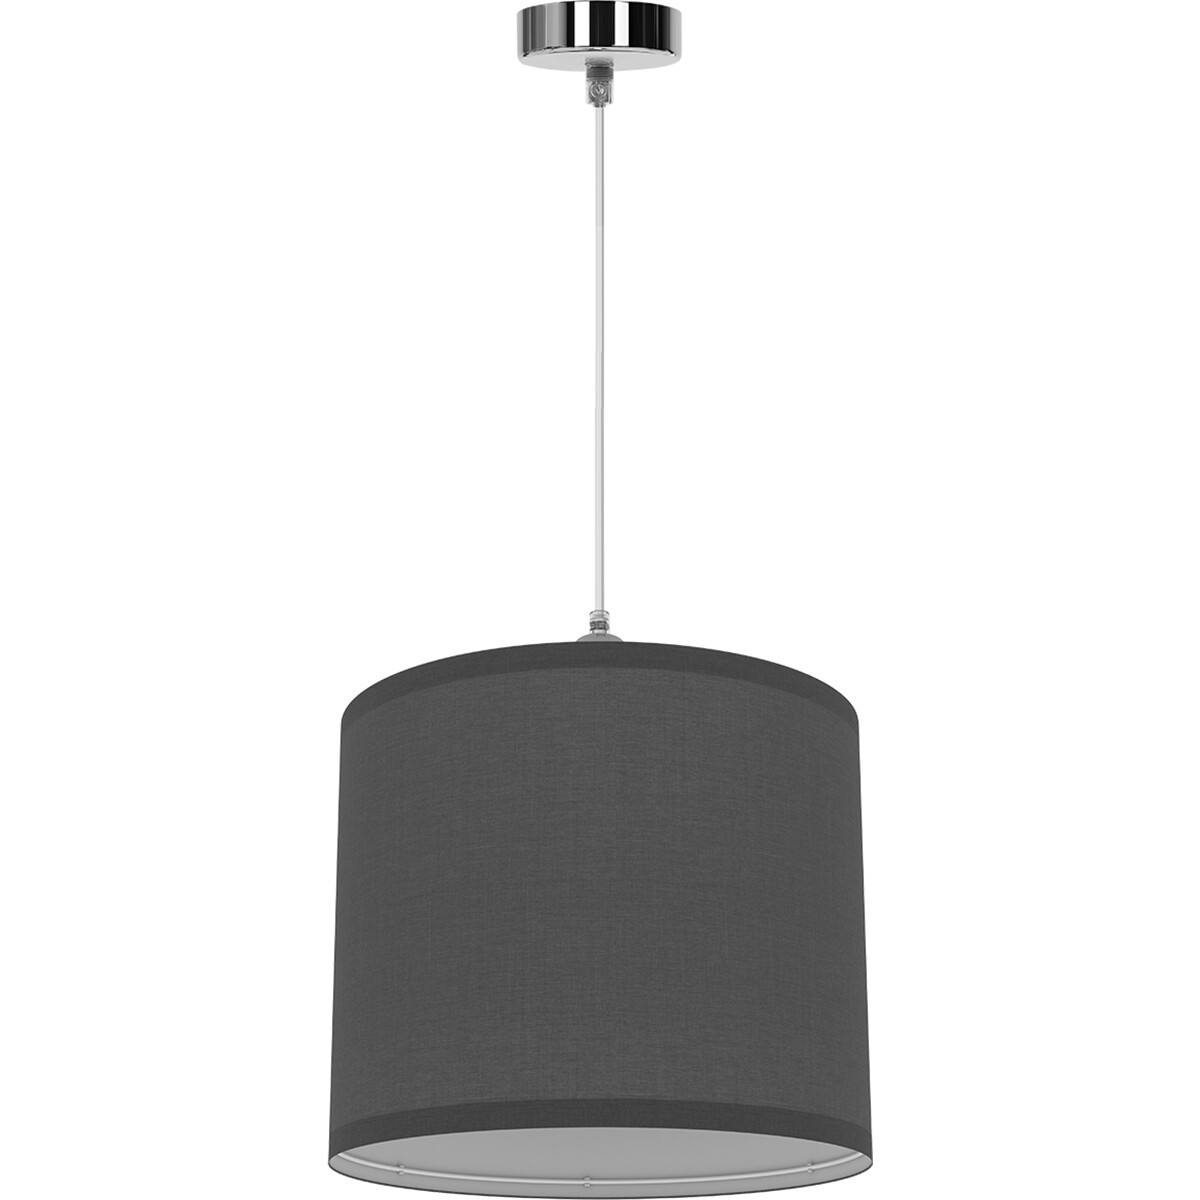 LED Hanglamp - Hangverlichting - Aigi Utra - E27 Fitting - Rond - Mat Grijs - Kunststof